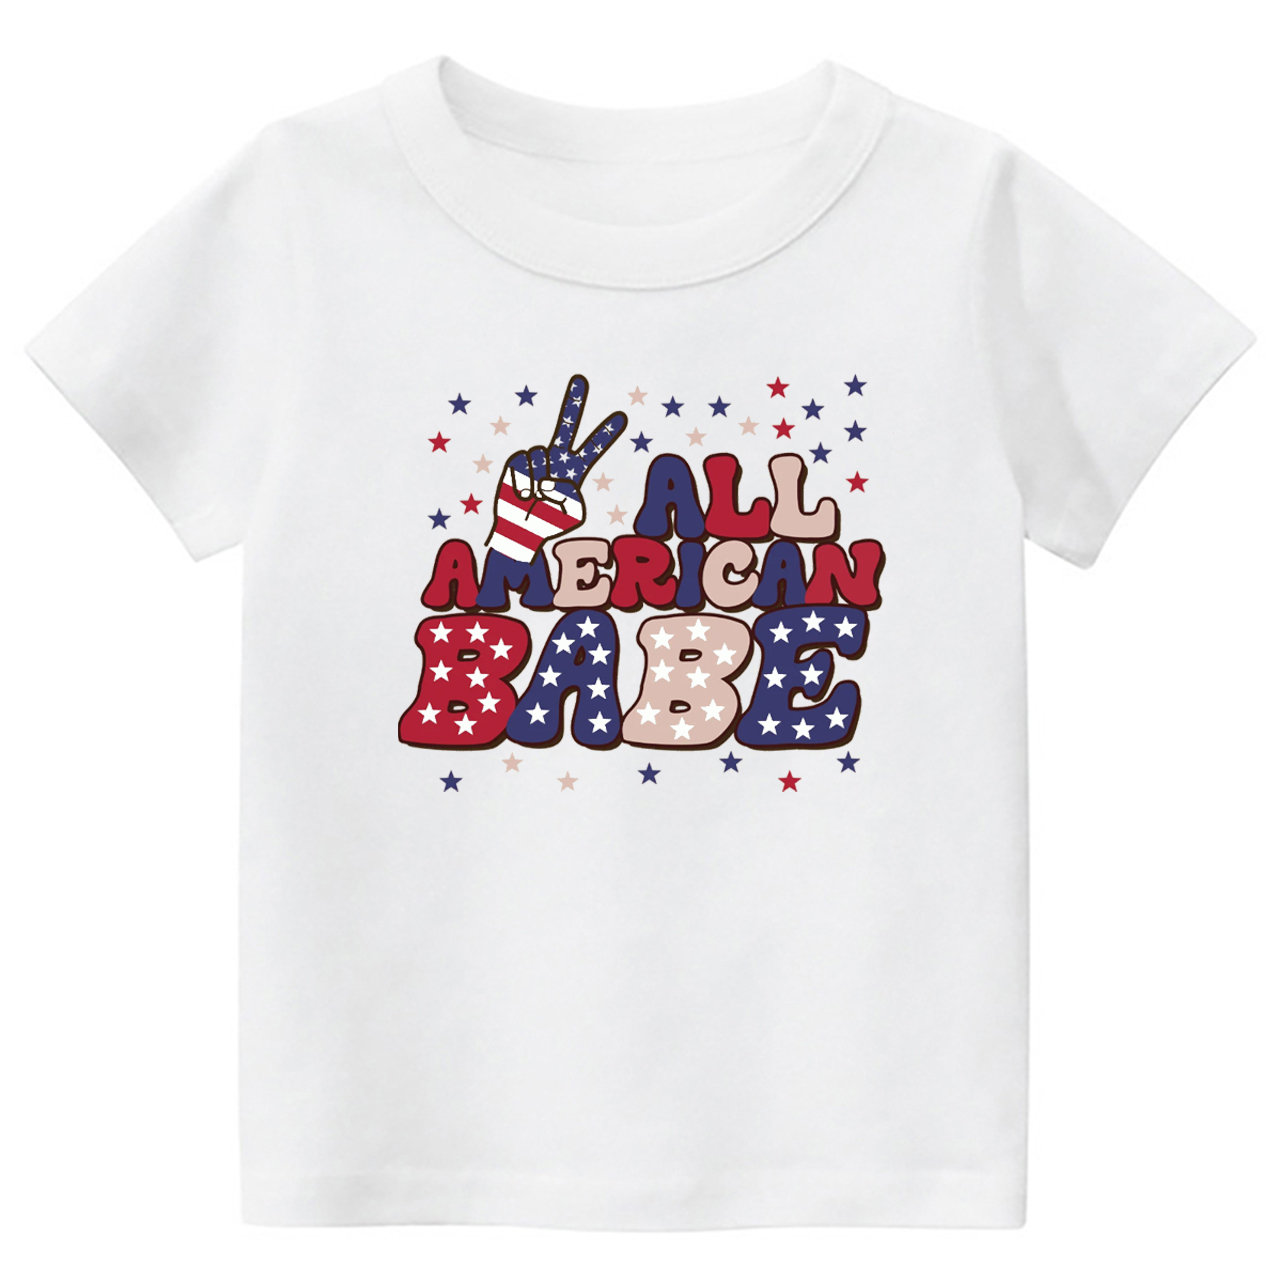 All American Babe Toddler Shirt